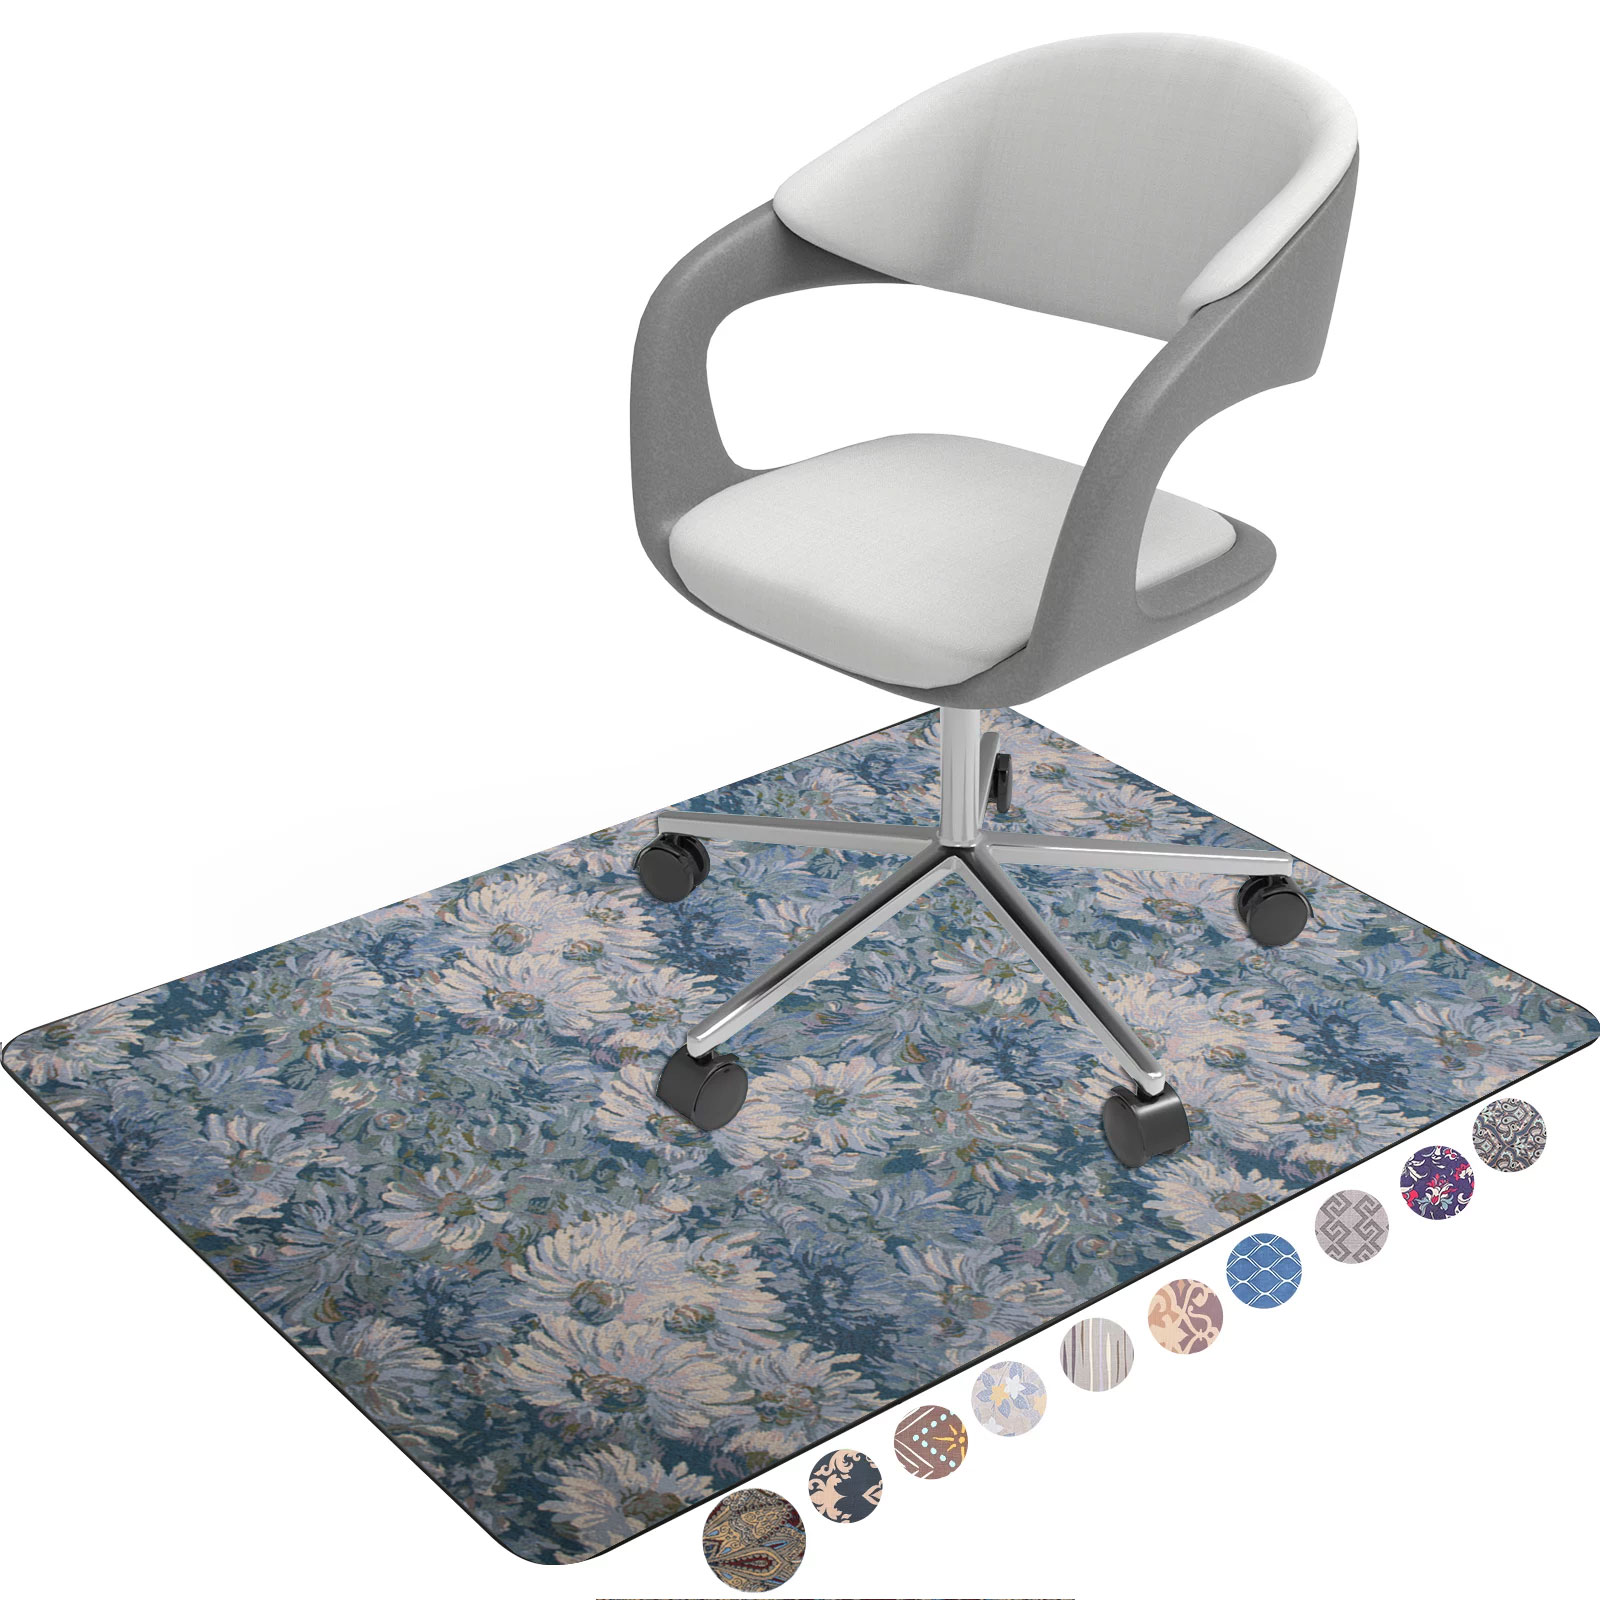 Fabric Chair Mat for carpet